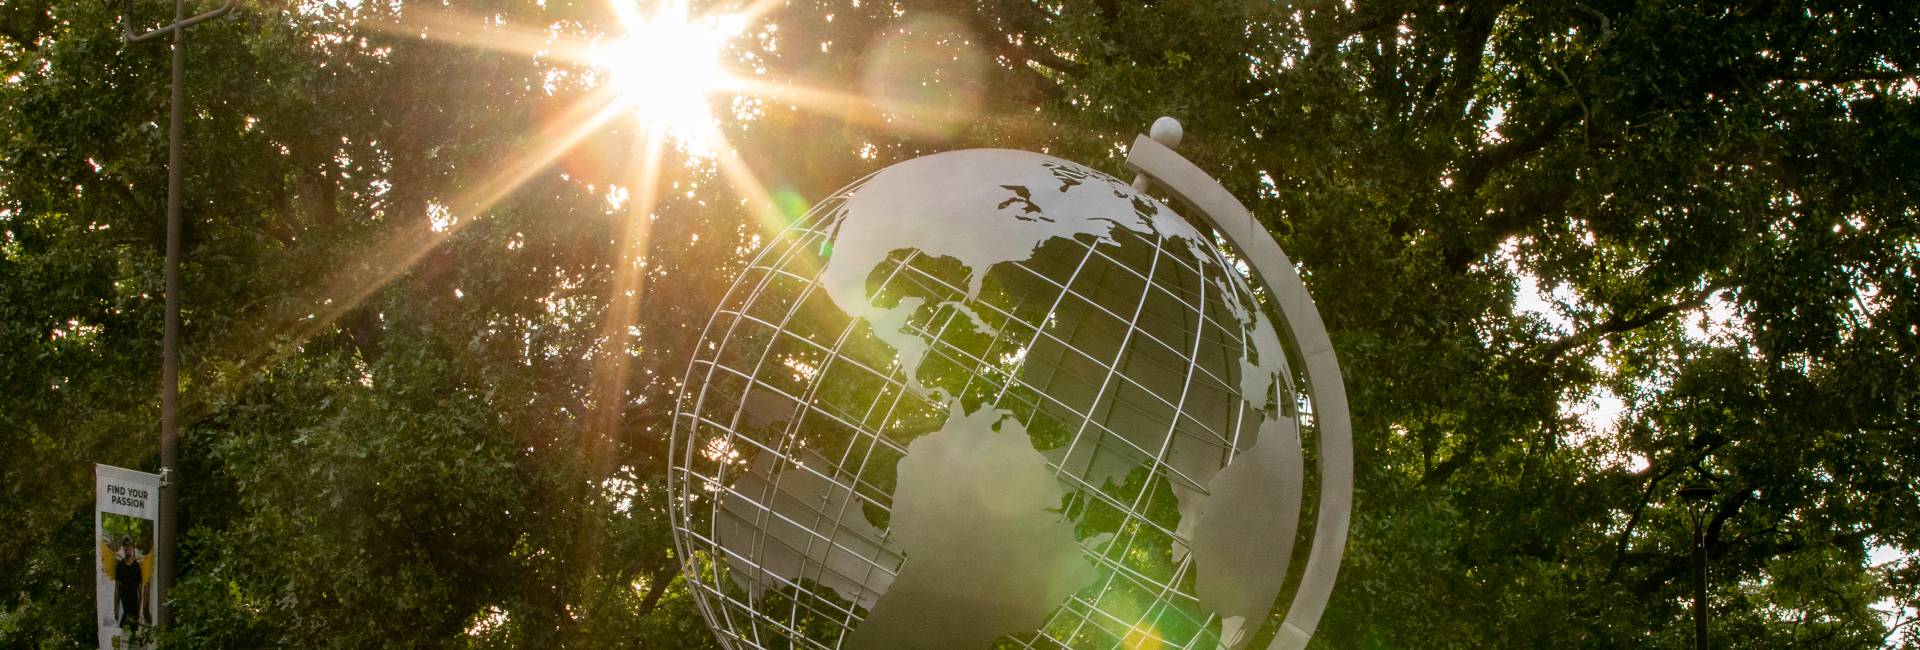 the world globe on the ksu marietta campus reminding us that sustainability is global. 